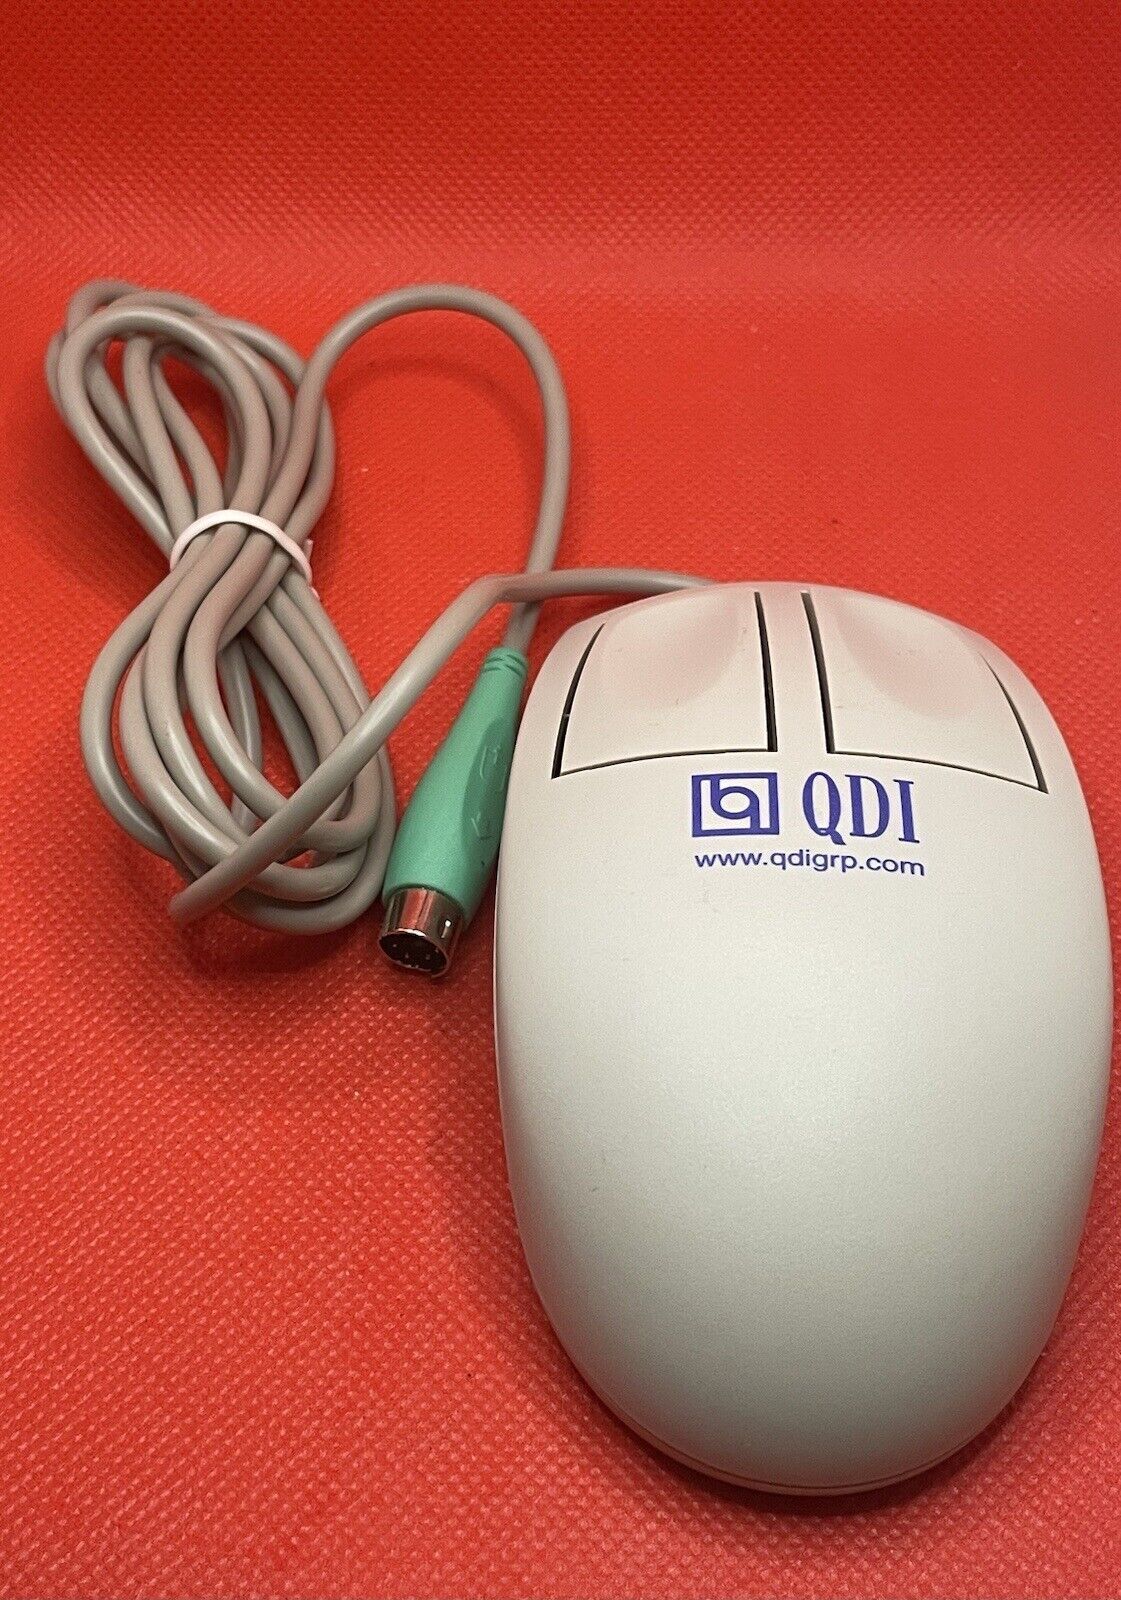 Logitech PS/2 Mouse MS-60 White Ball Advertising QDI Computing Vintage